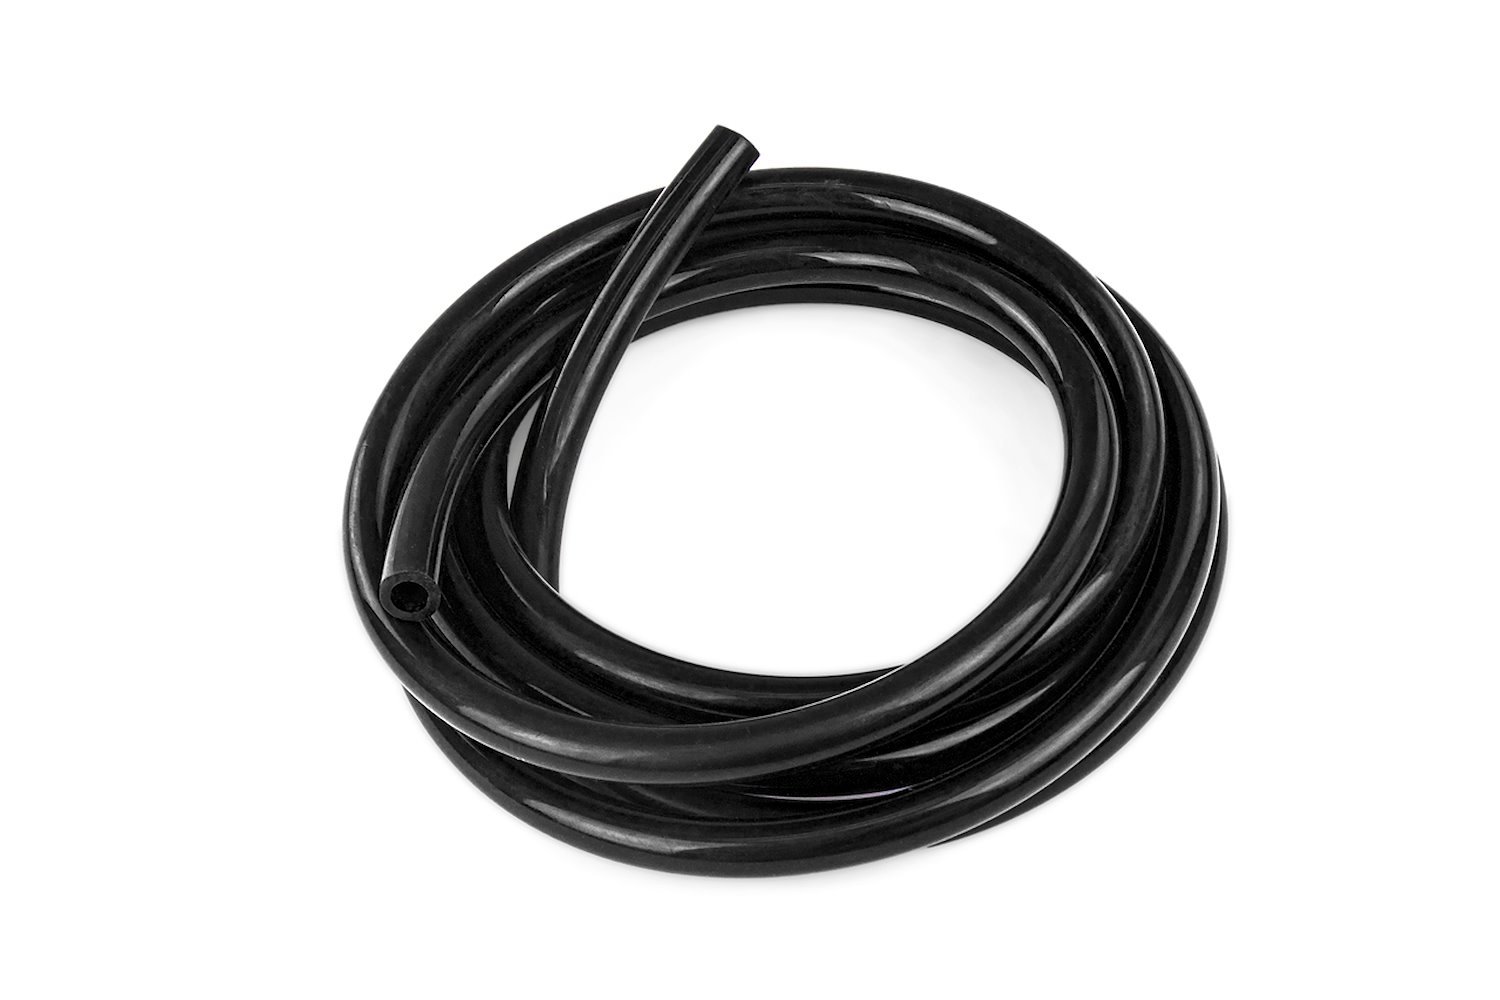 HTSVH5-BLKx5 High-Temperature Silicone Vacuum Hose Tubing, 13/64 in. ID, 5 ft. Roll, Black